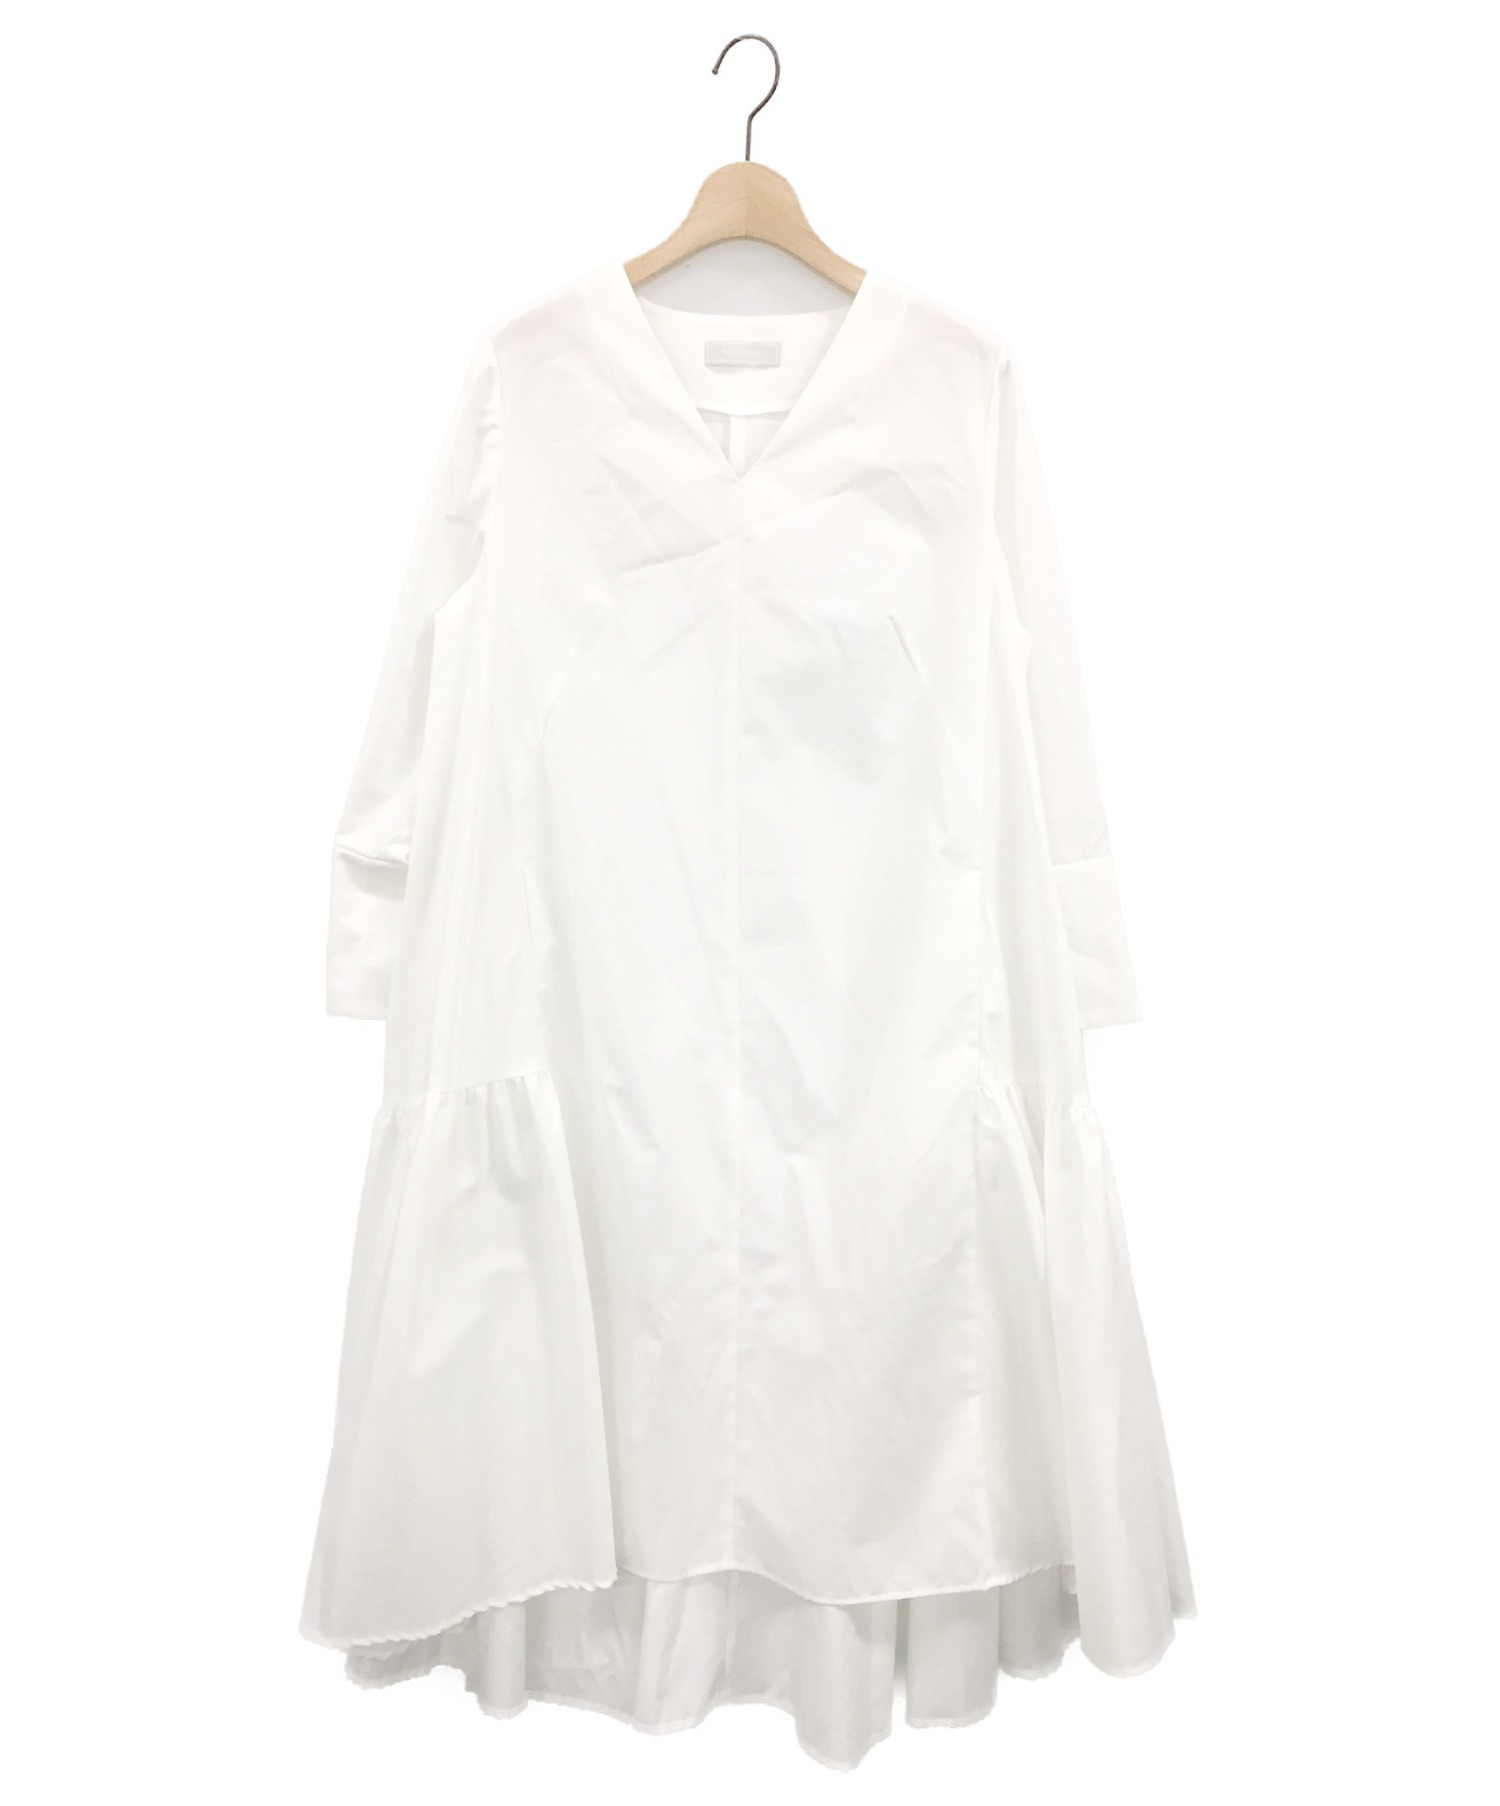 Celford セルフォード ａラインボリュームワンピース ホワイト サイズ 38 ブランド古着の通販サイト ブランドコレクト